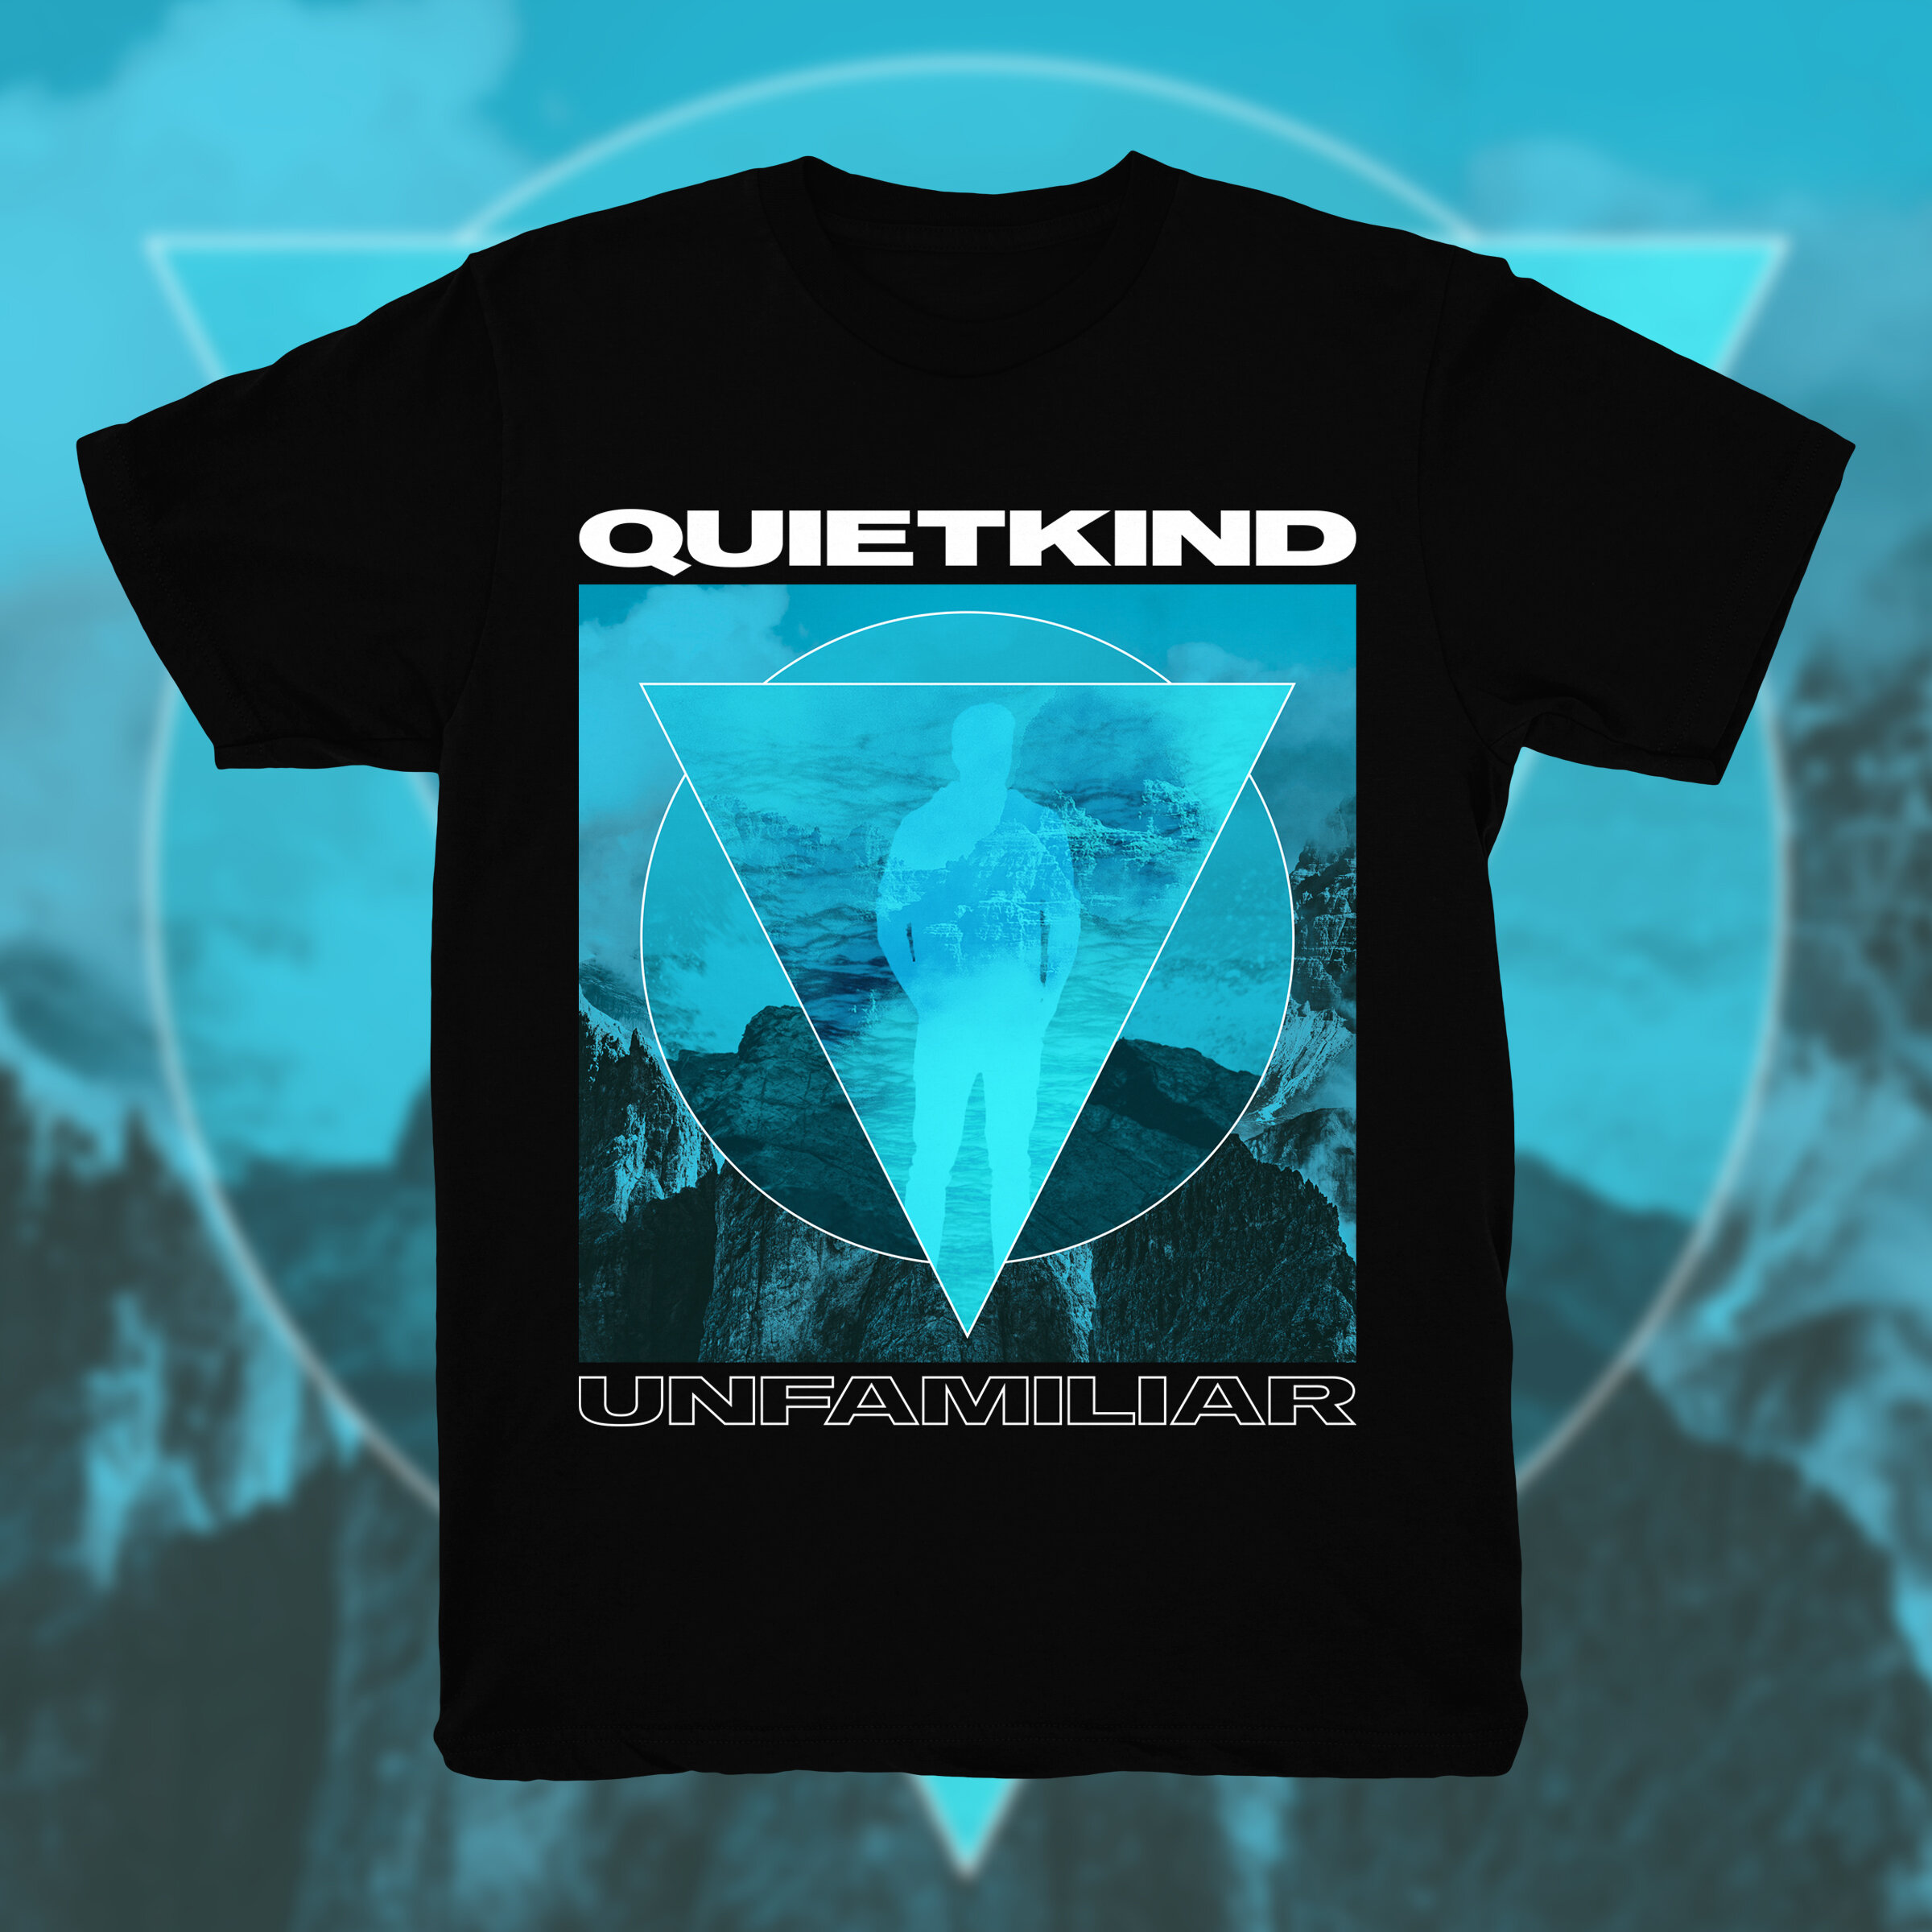 Quietkind Design 1 Shirt Mockup.jpg